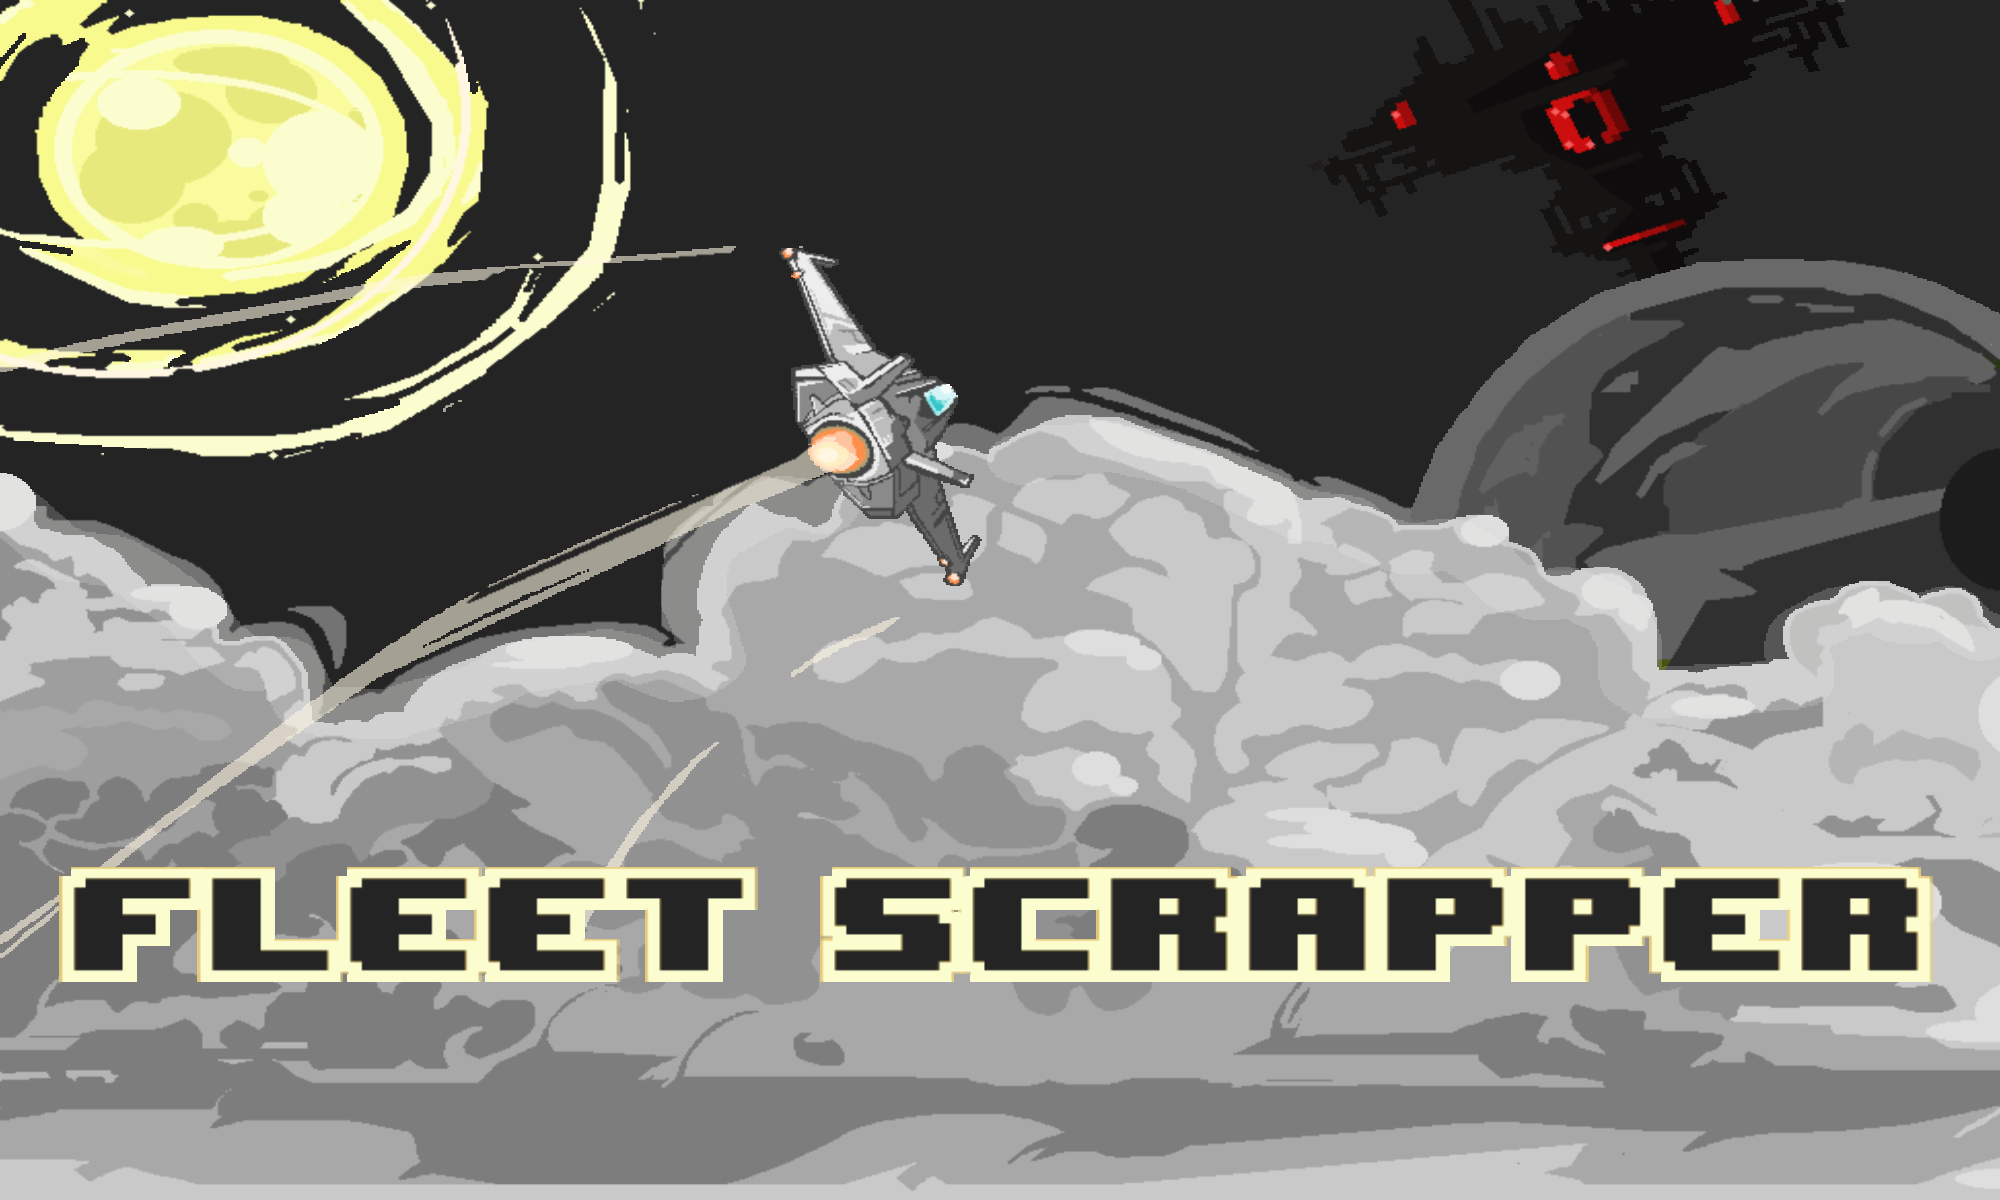 Fleet Scrapper